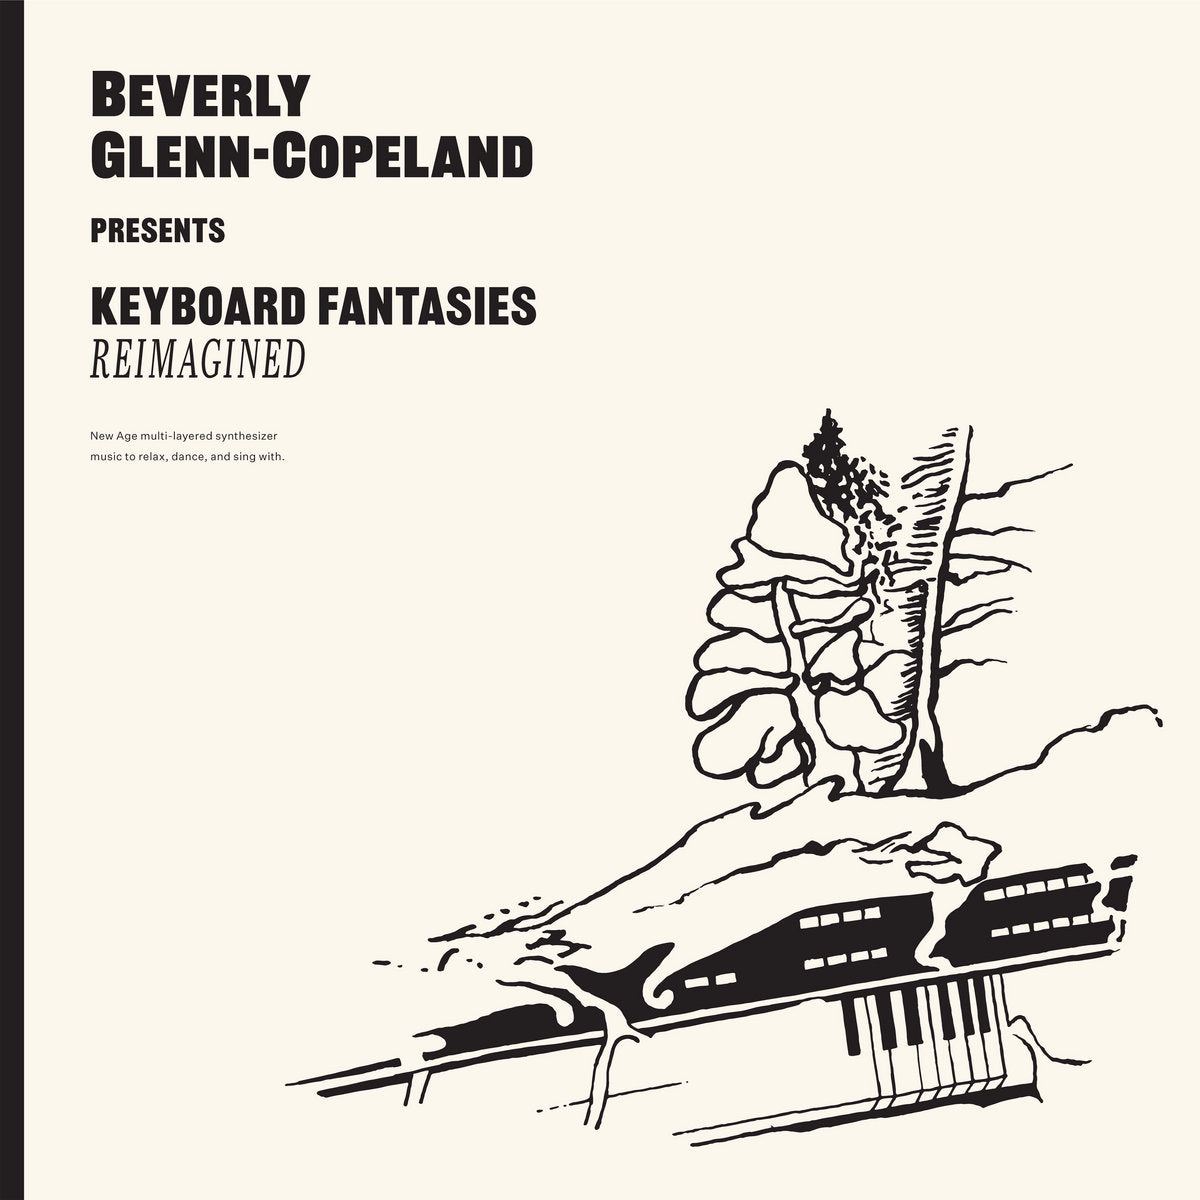 Glenn-Copeland, Beverly "Keyboard Fantasies Reimagined"